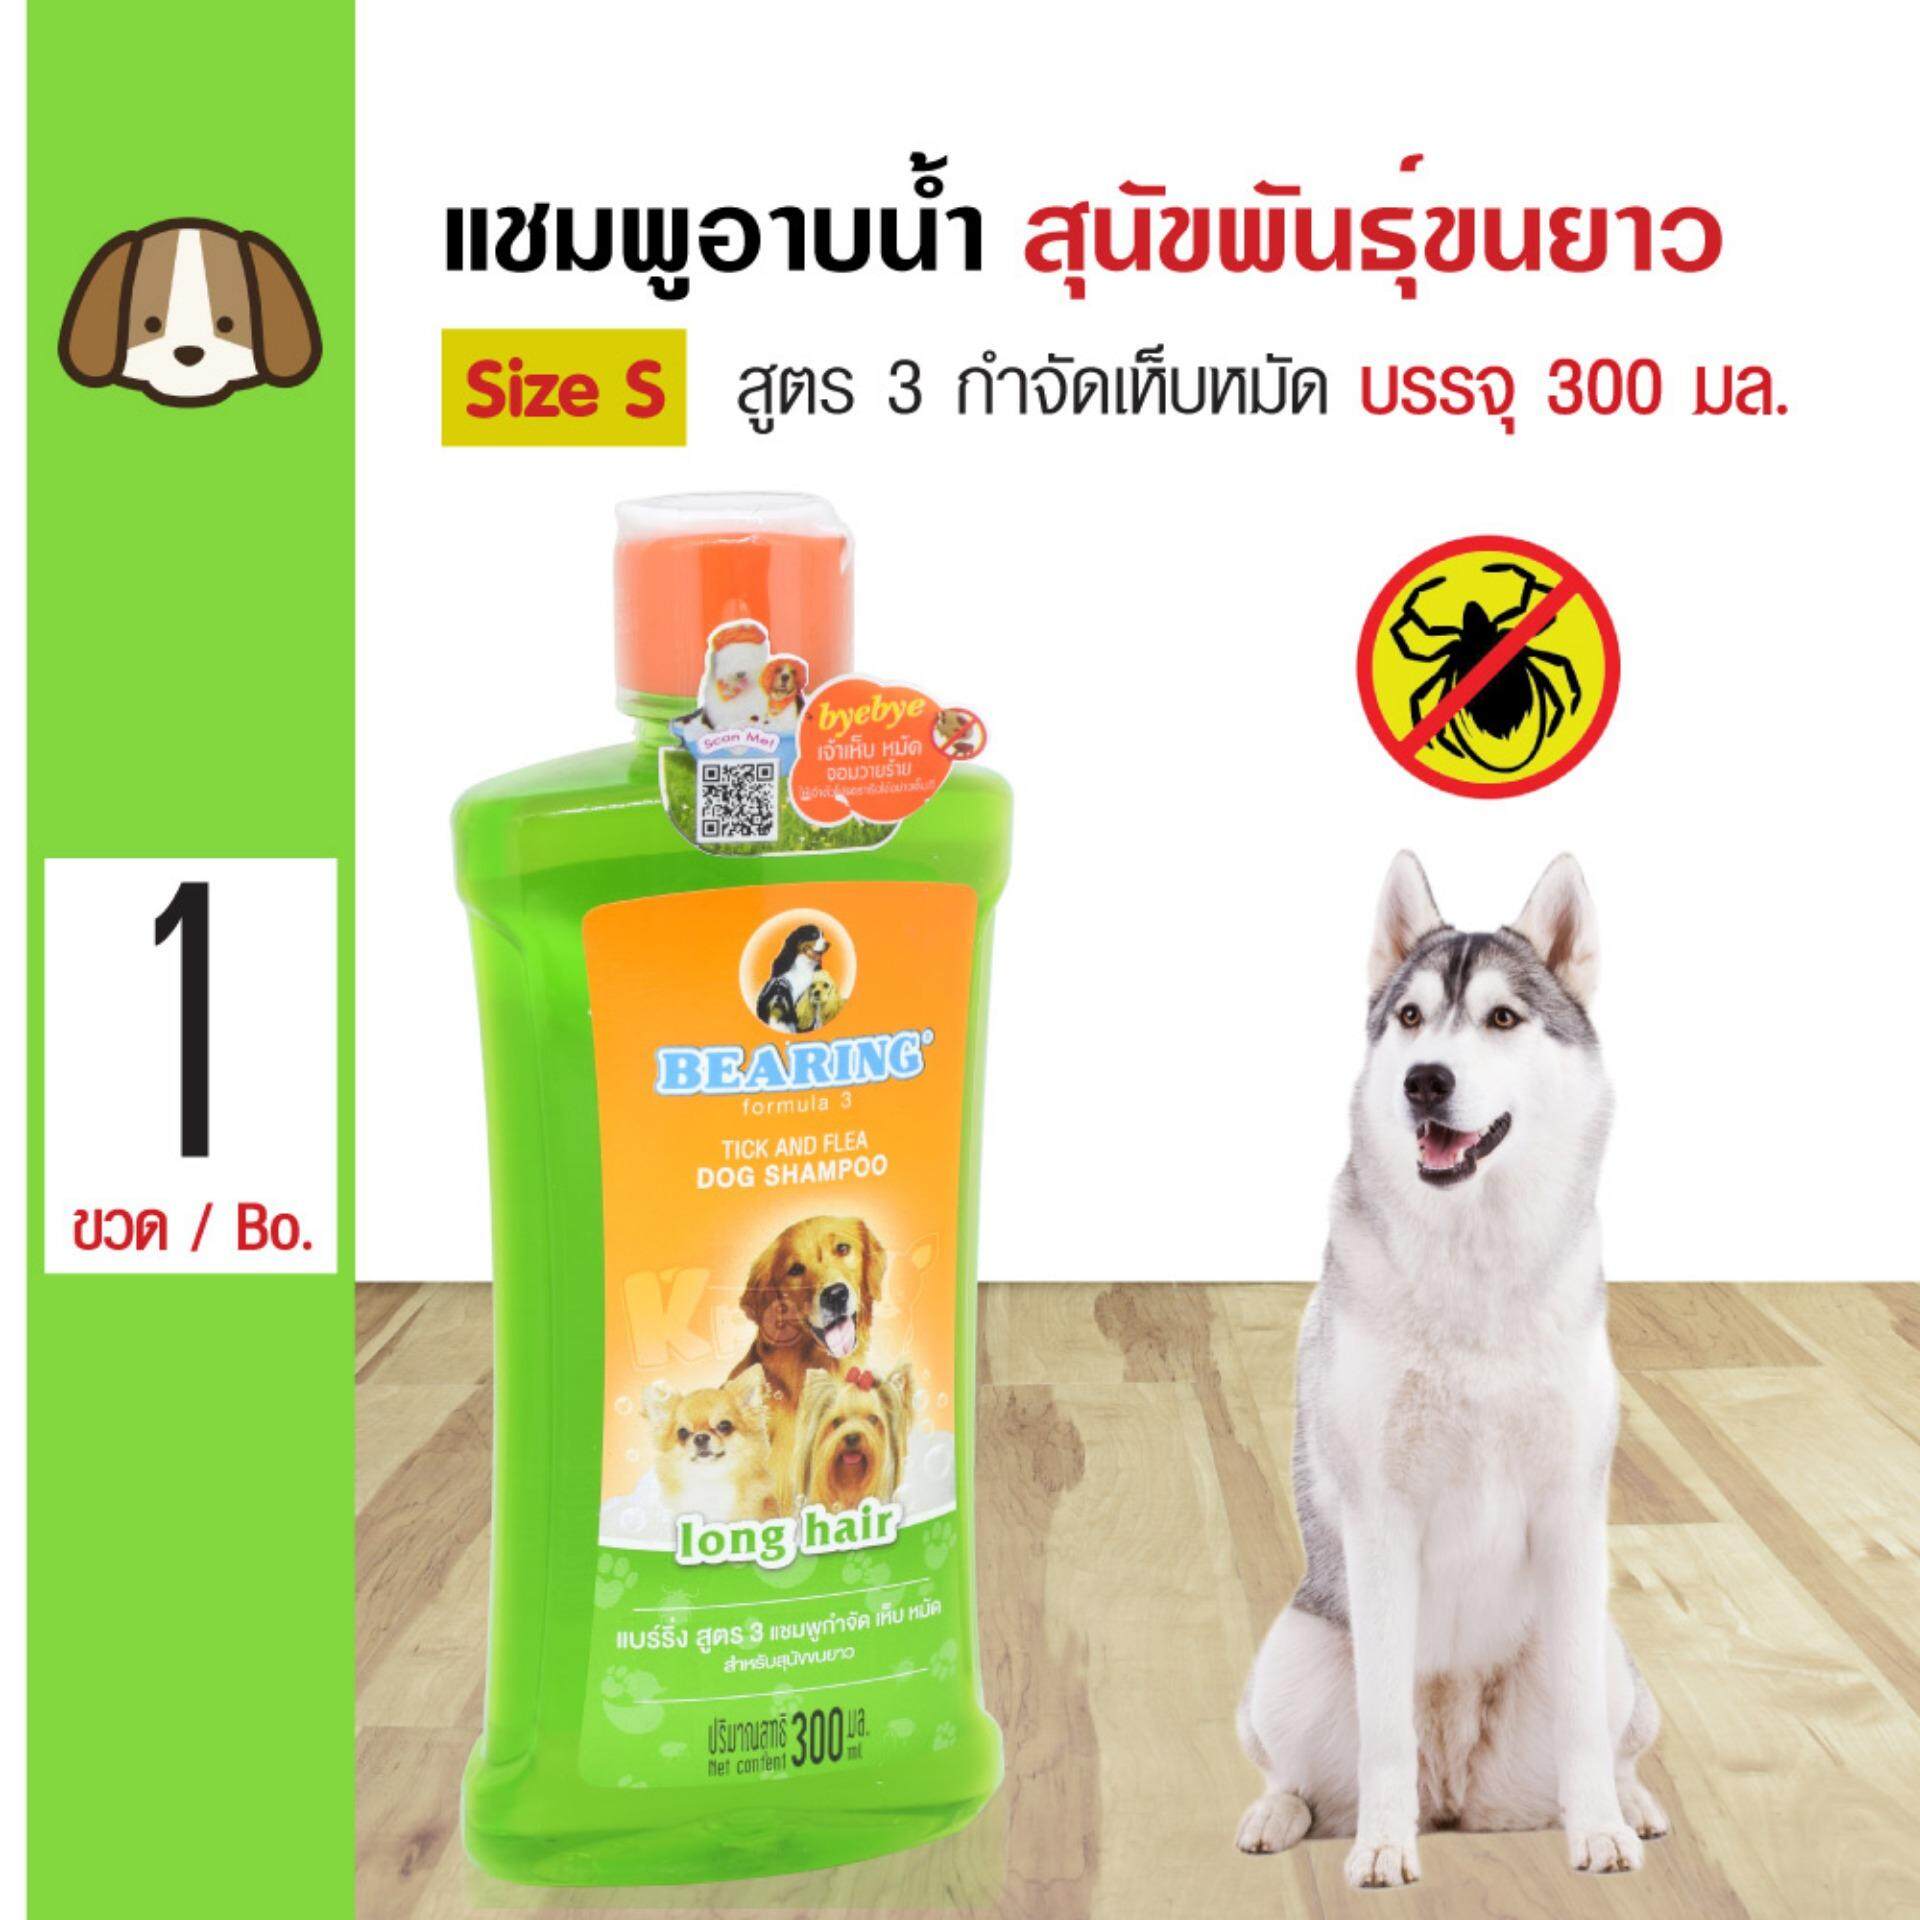 Bearing Dog Shampoo แชมพูสุนัข สูตร 3 แชมพูกำจัดเห็บหมัด สำหรับสุนัขขนยาว ทุกสายพันธุ์ (300 มล./ ขวด)